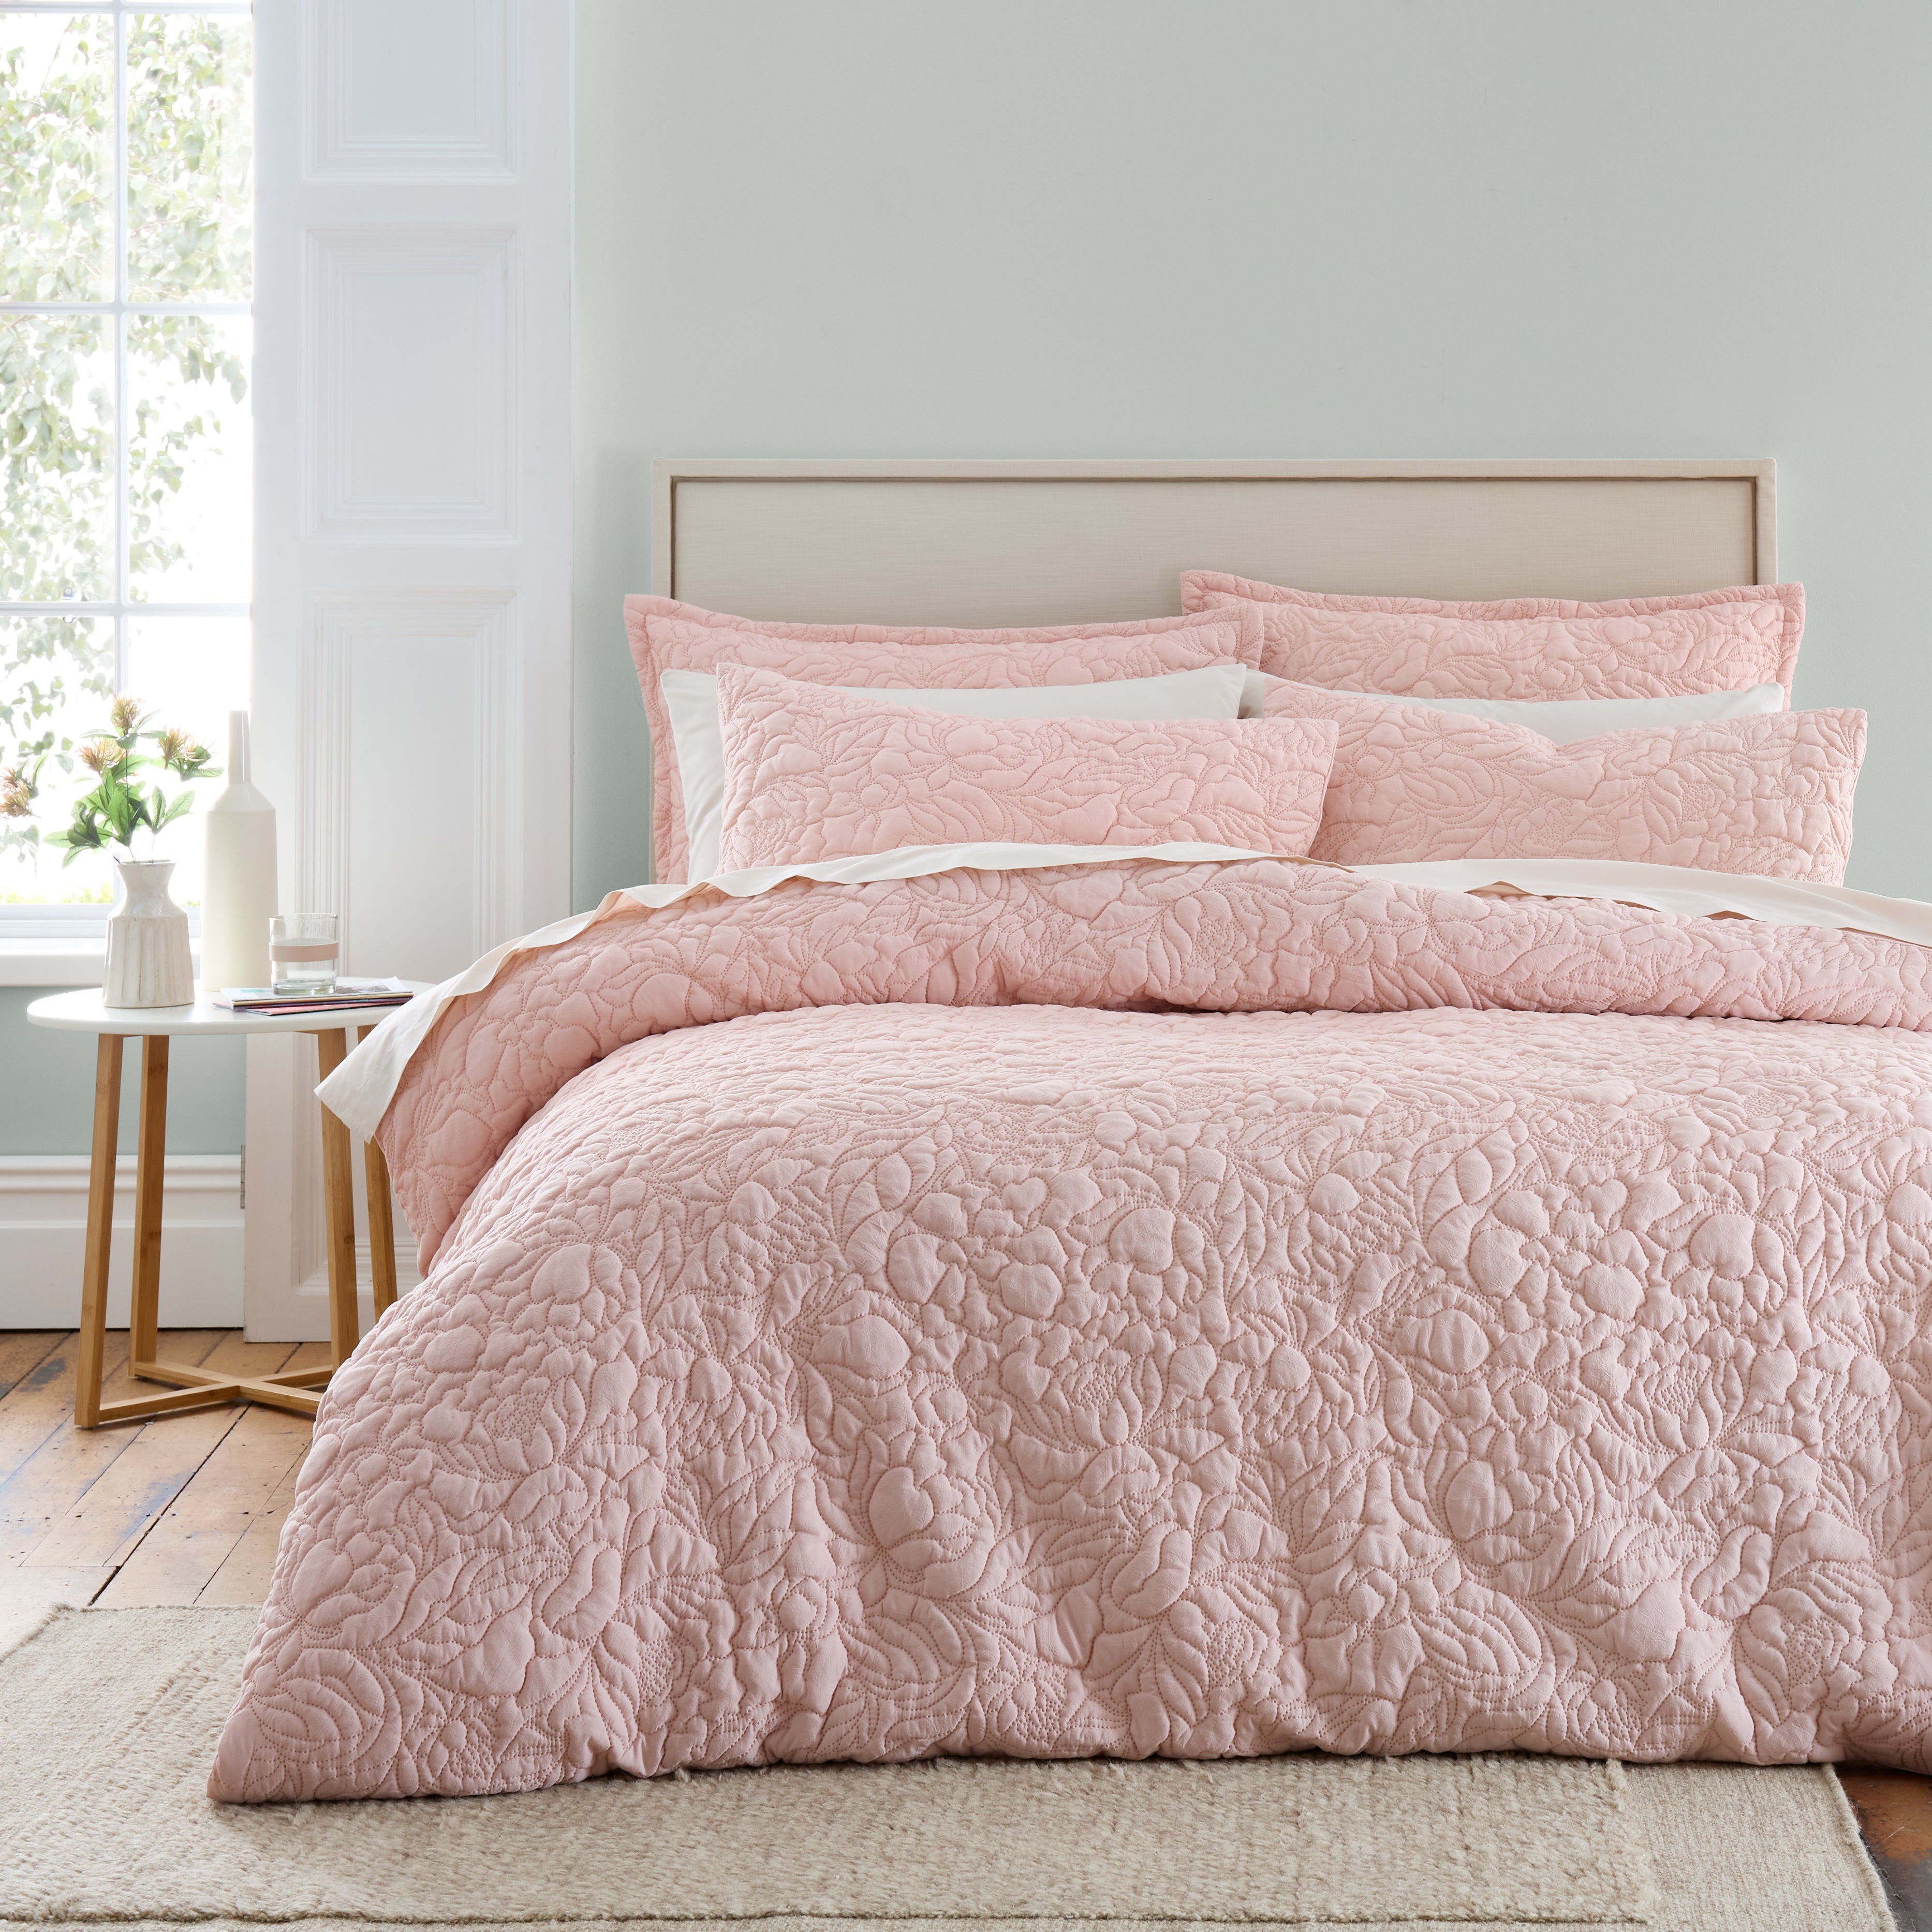 Ada Floral Blush Duvet Cover And Pillowcase Set Blush Pink